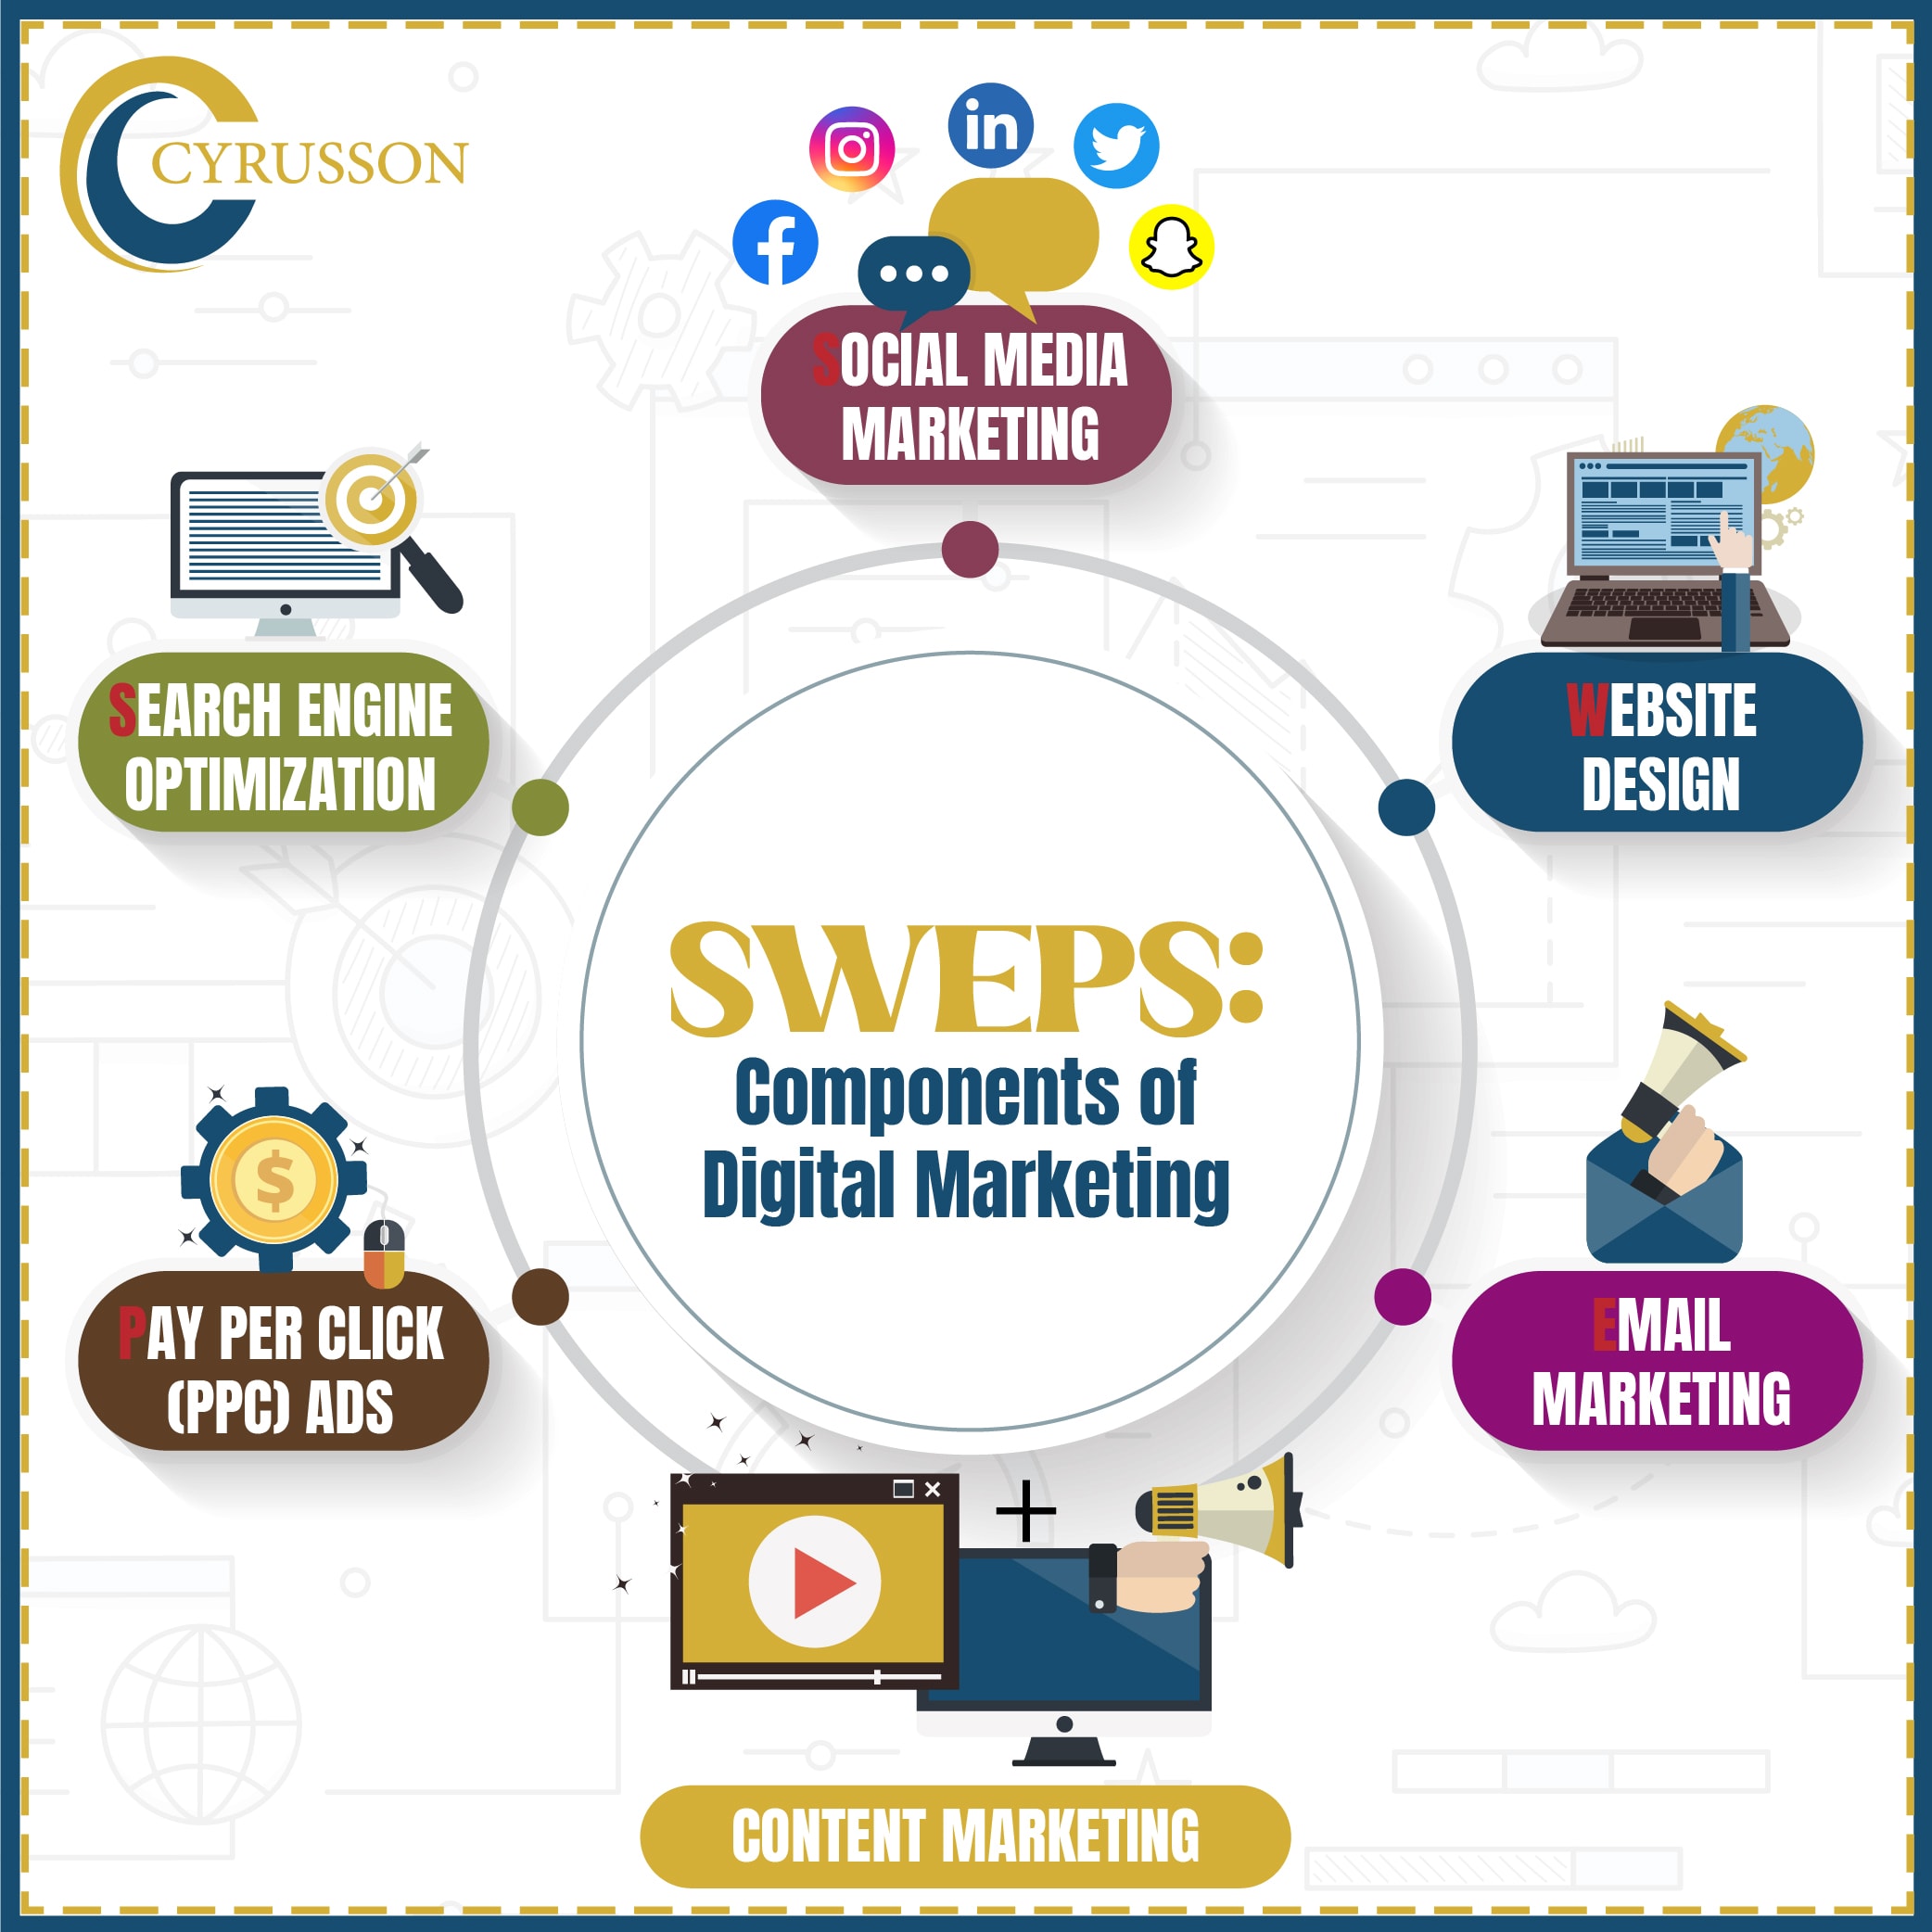 What is CM in digital marketing?